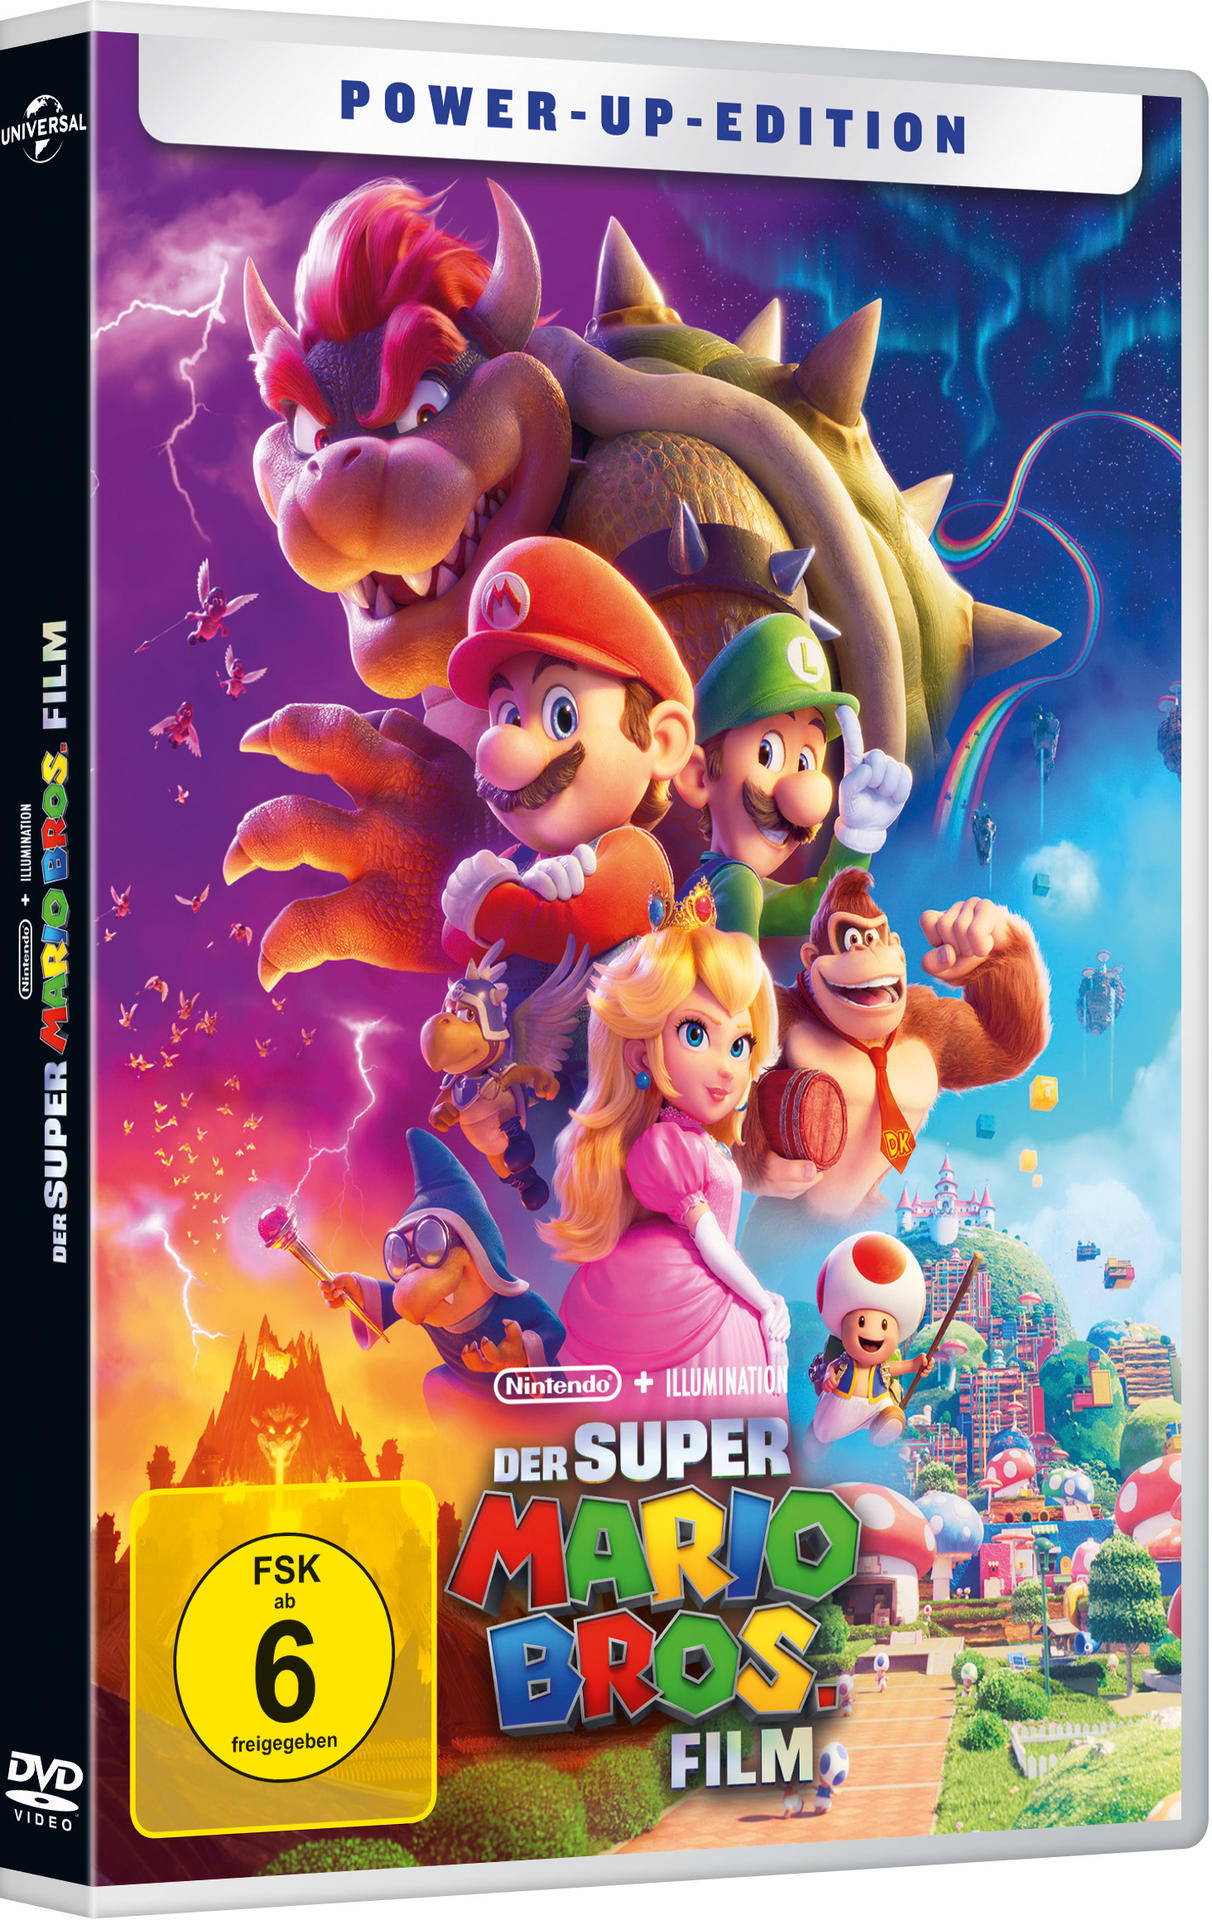 Der Super Mario DVD Bros. Film